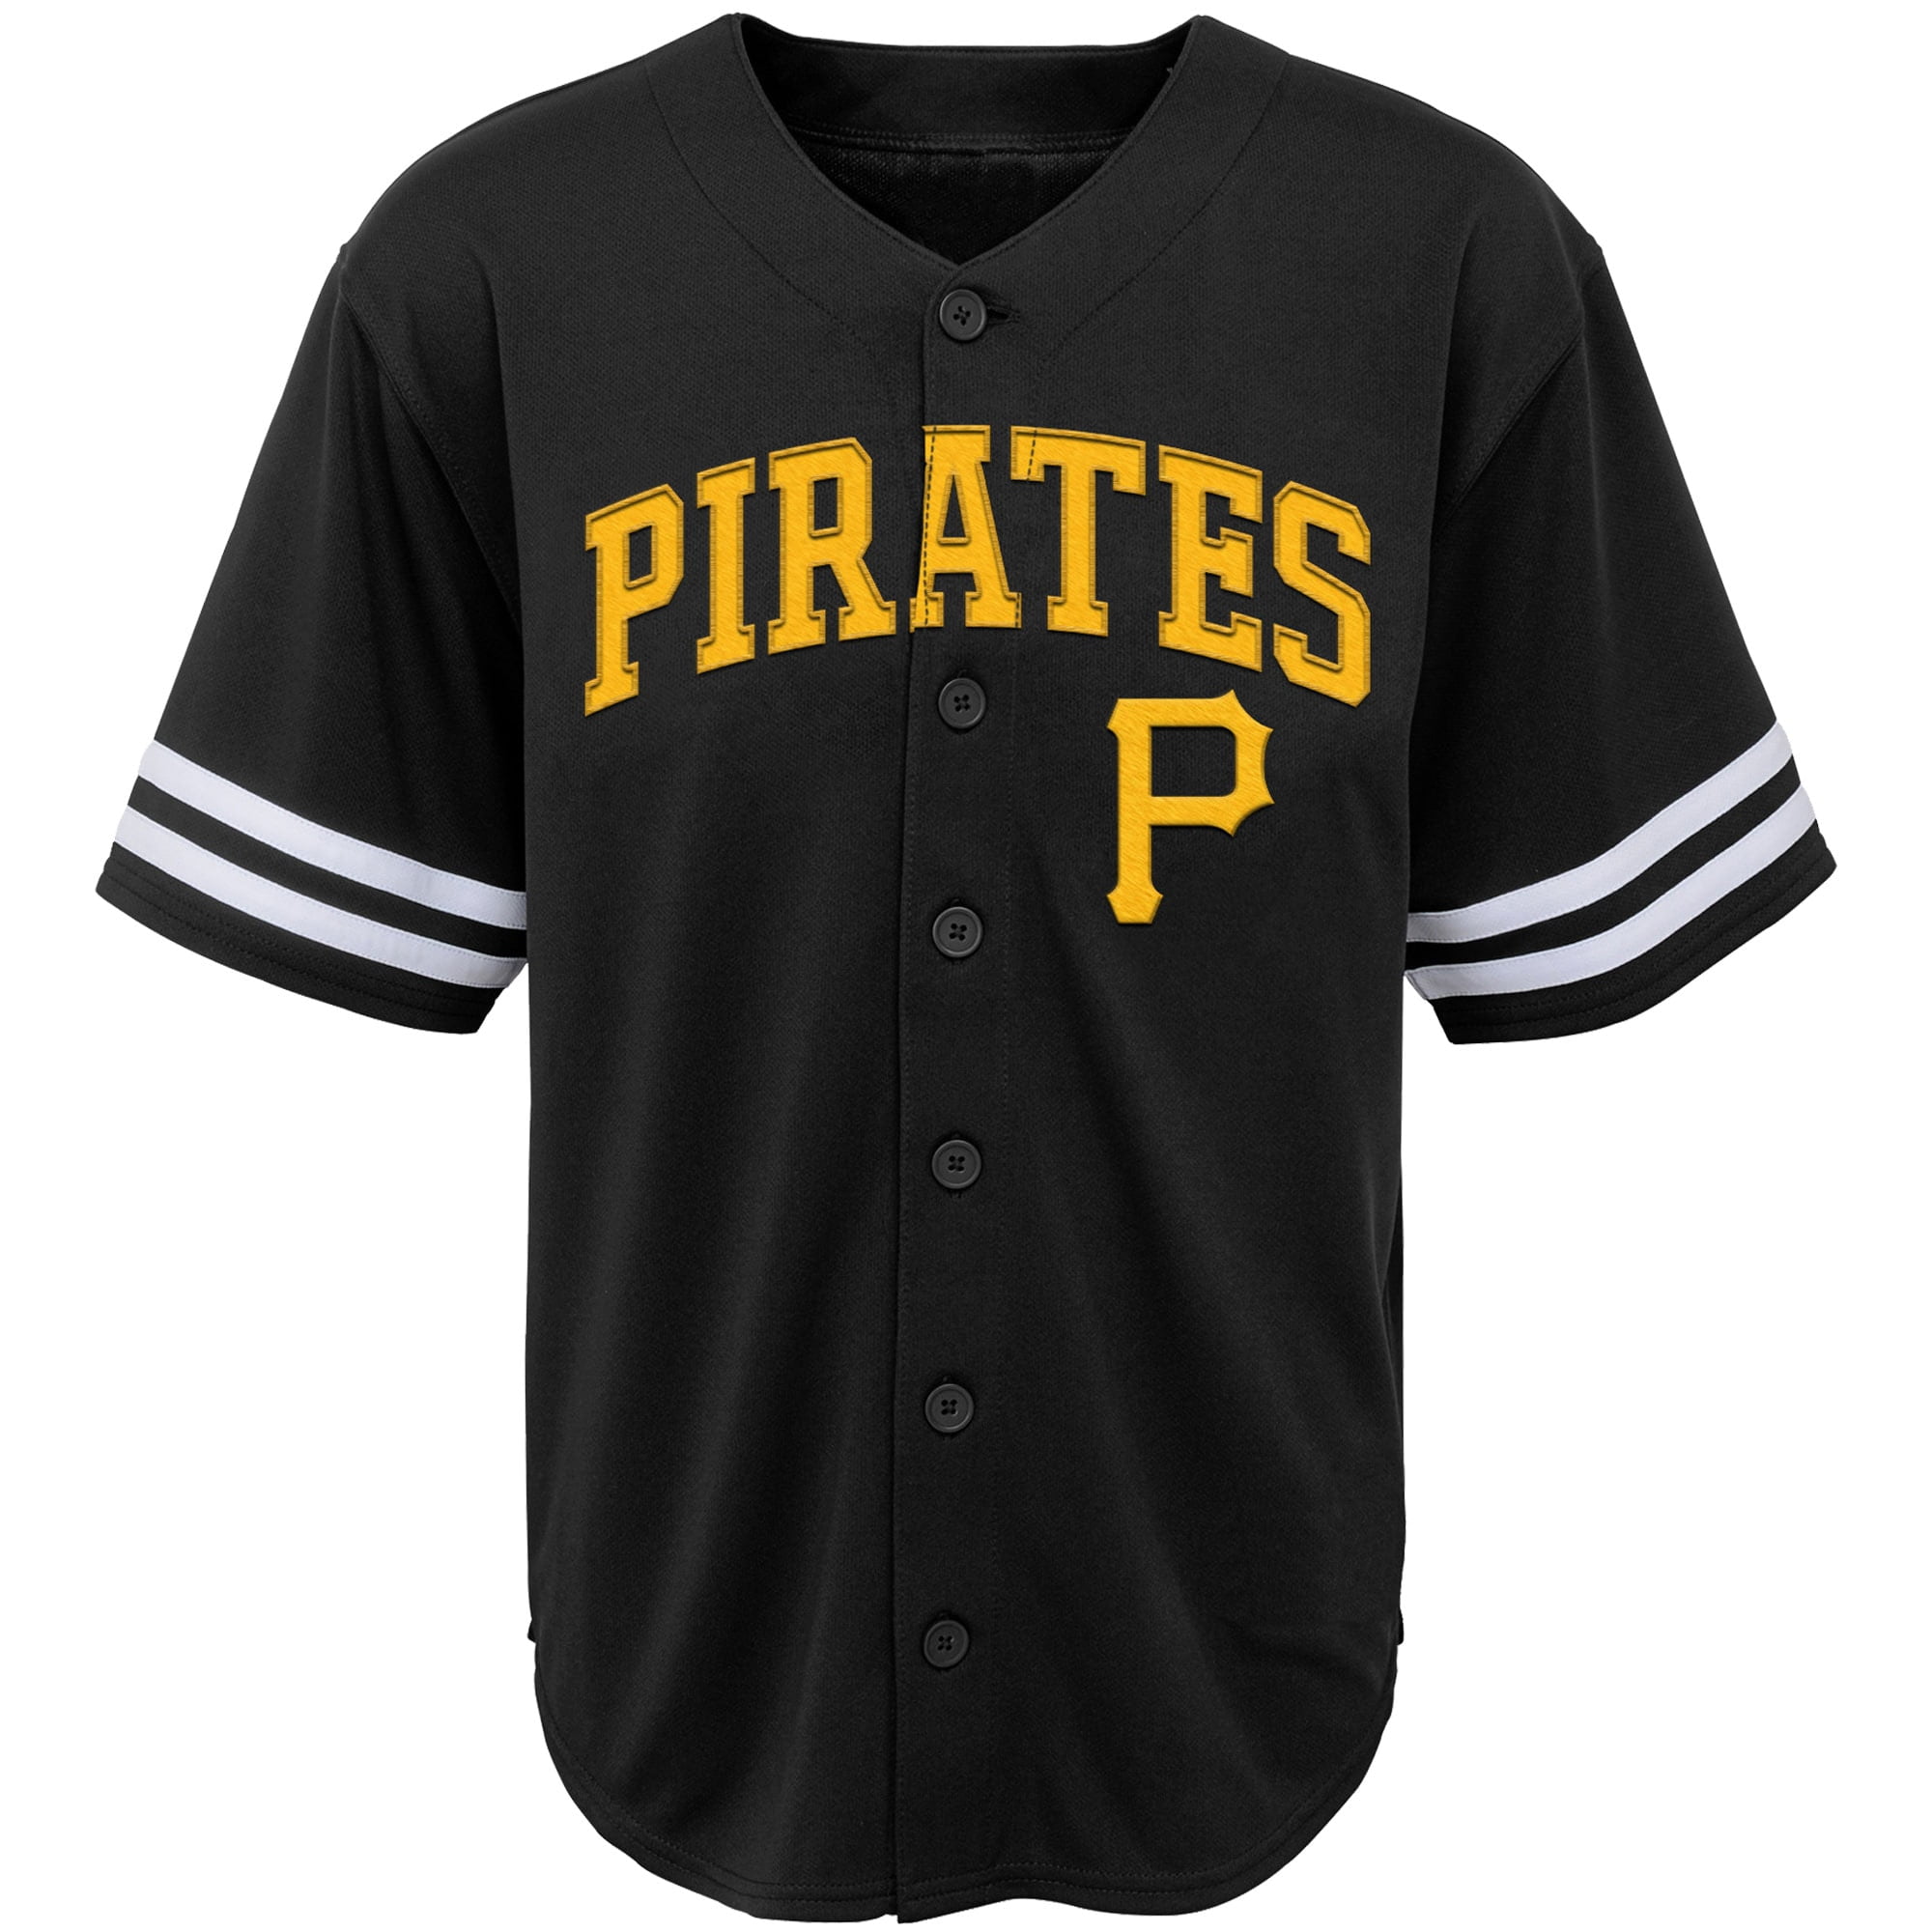 Youth Black Pittsburgh Pirates Team Jersey - Walmart.com ...